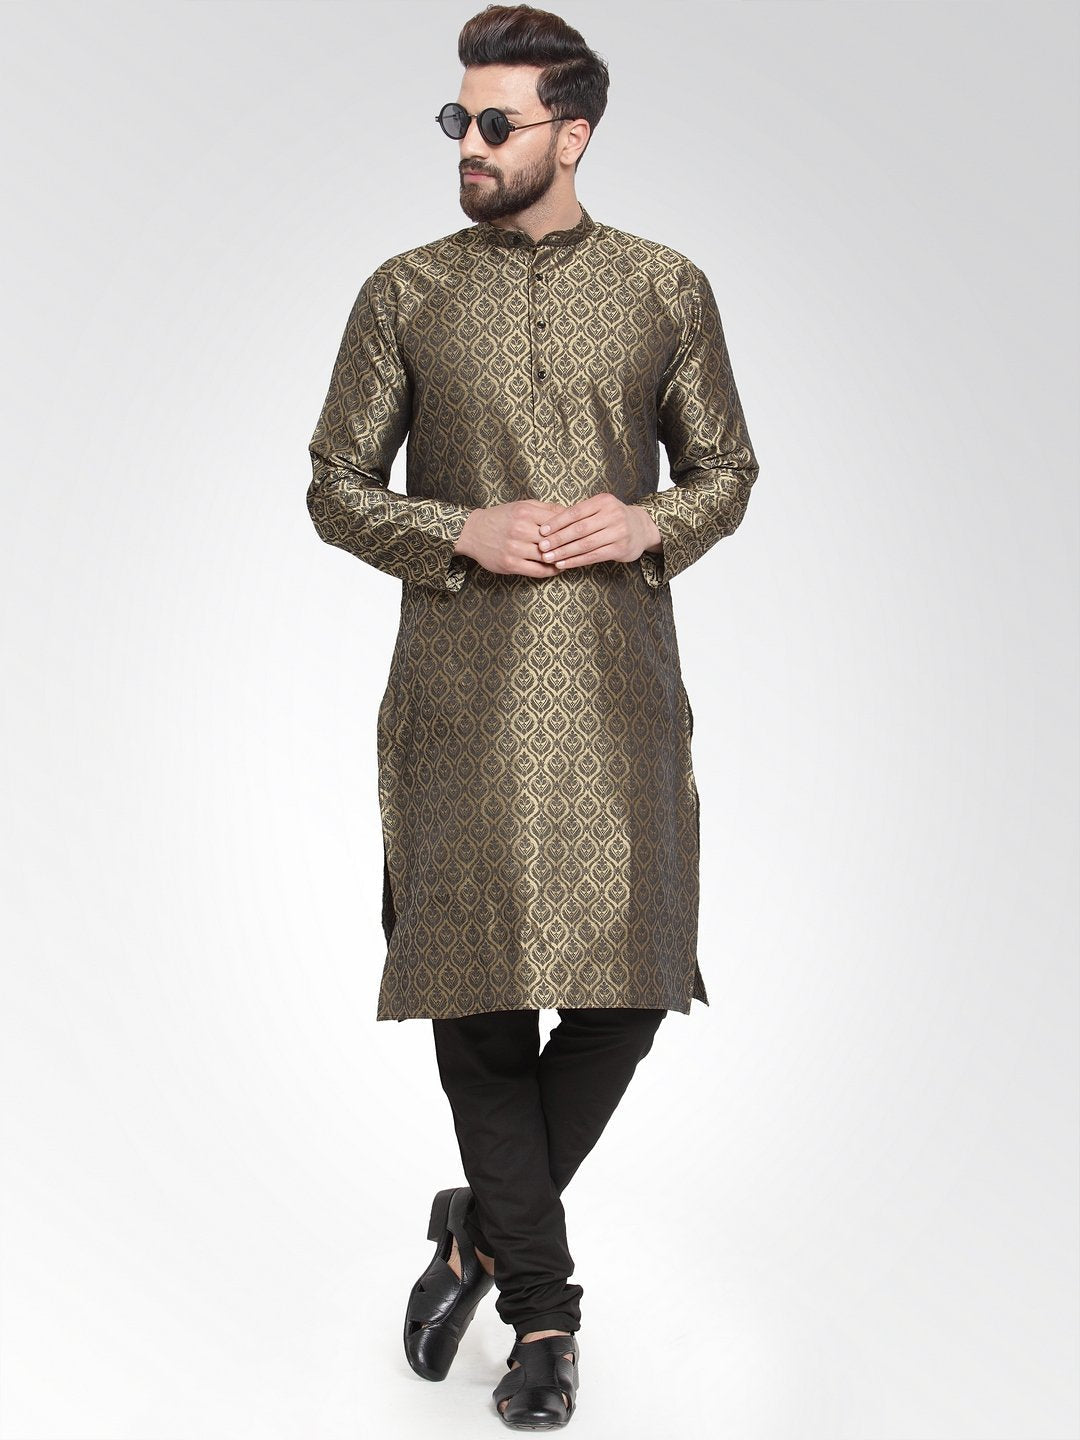 Men's Gold-Colored & Black Self Design Kurta with Churidar ( JOKP 584 Golden ) - Virat Fashions